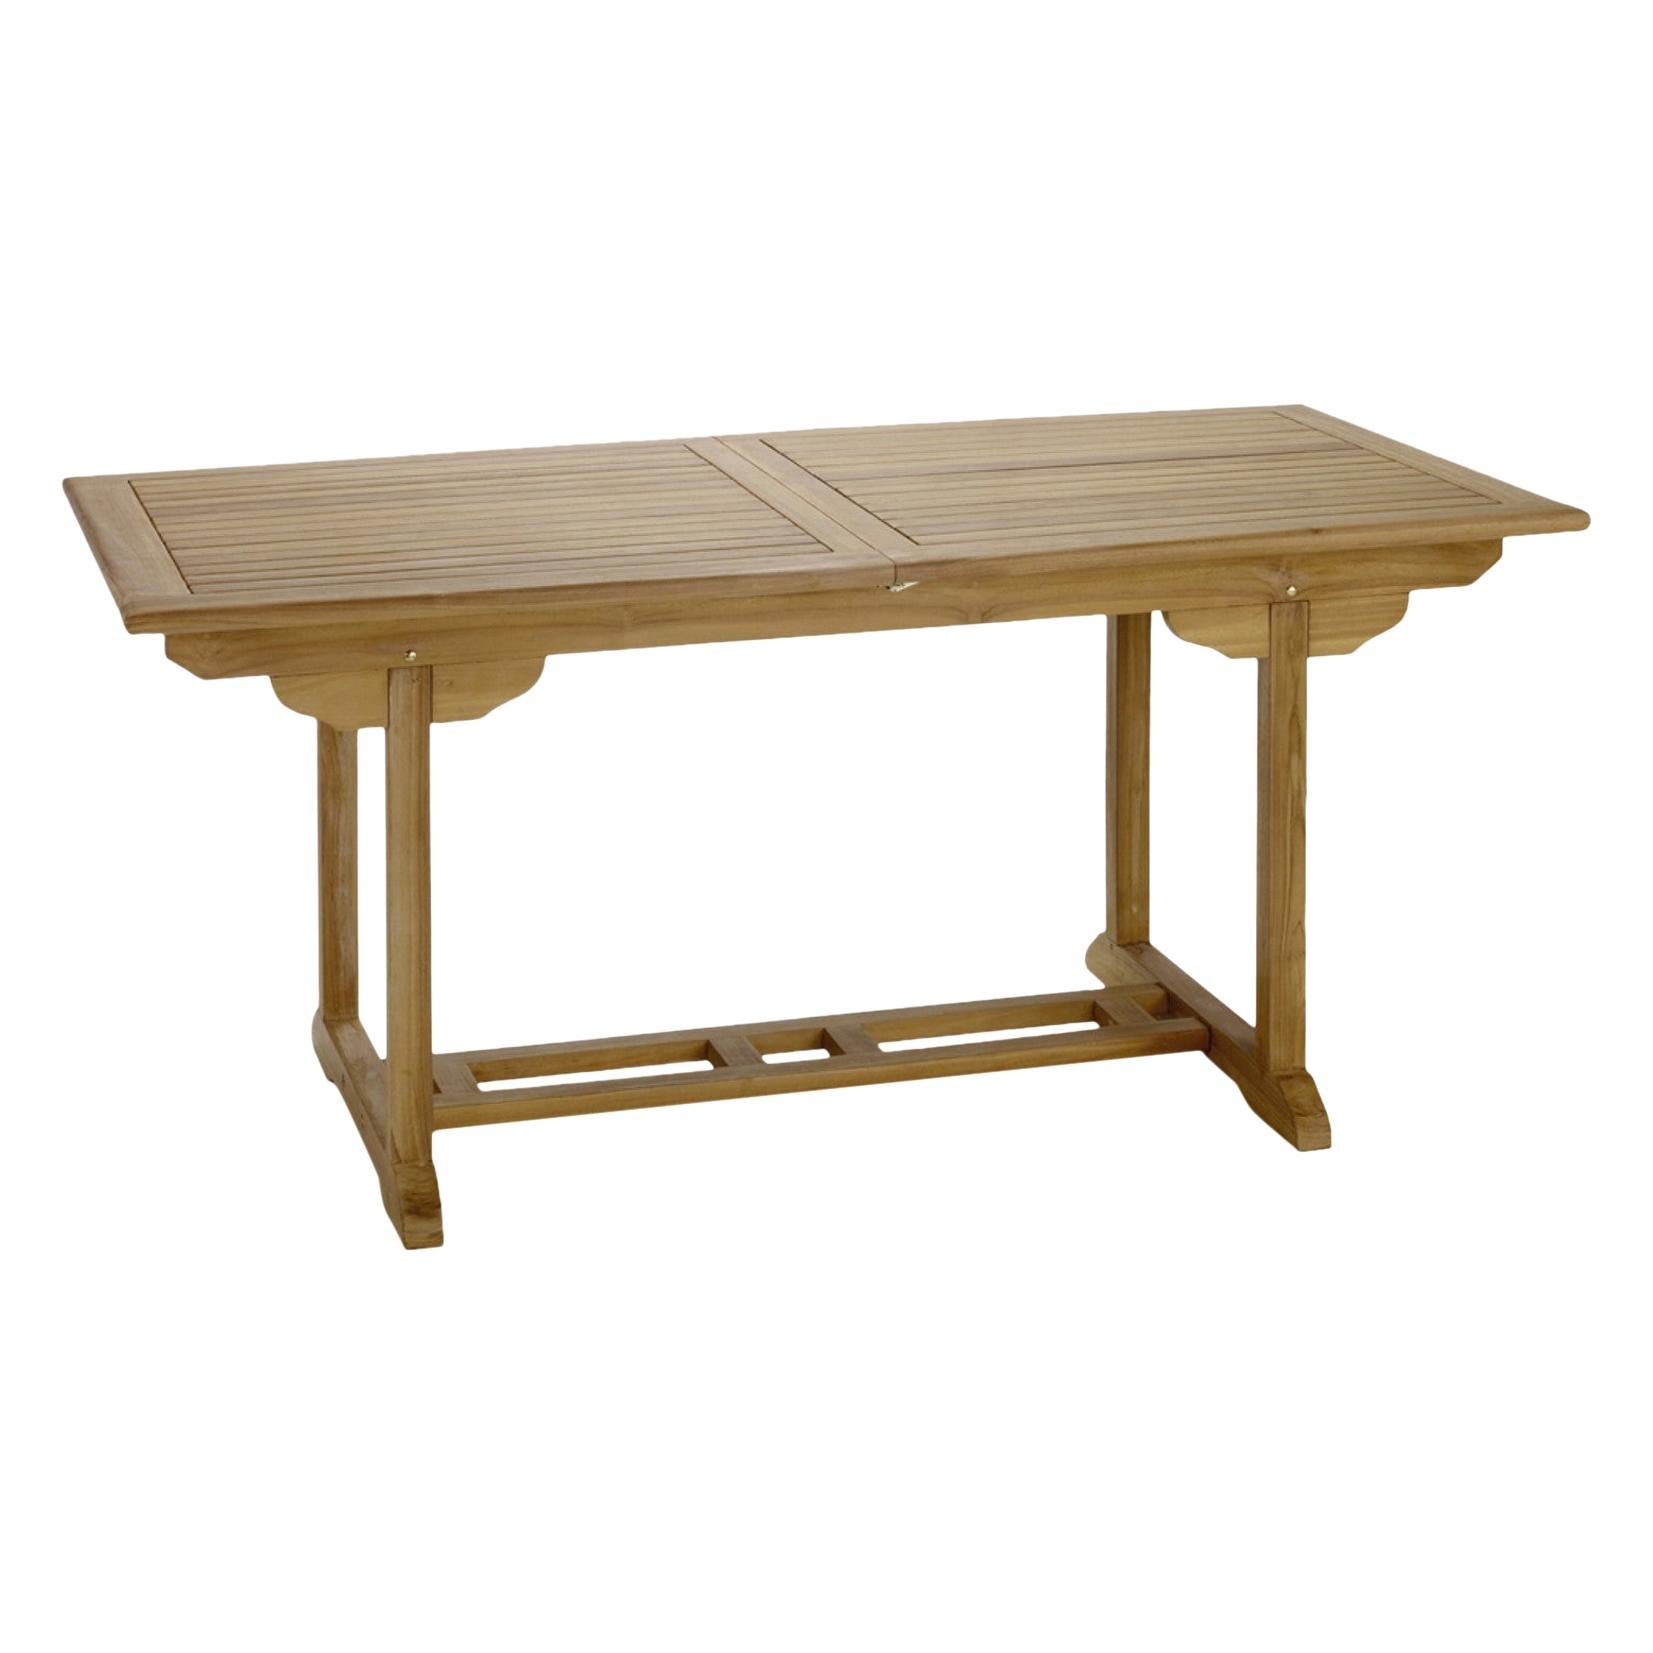 New Teak Rectangular Foldable Dining Table, Indoor und Outdoor